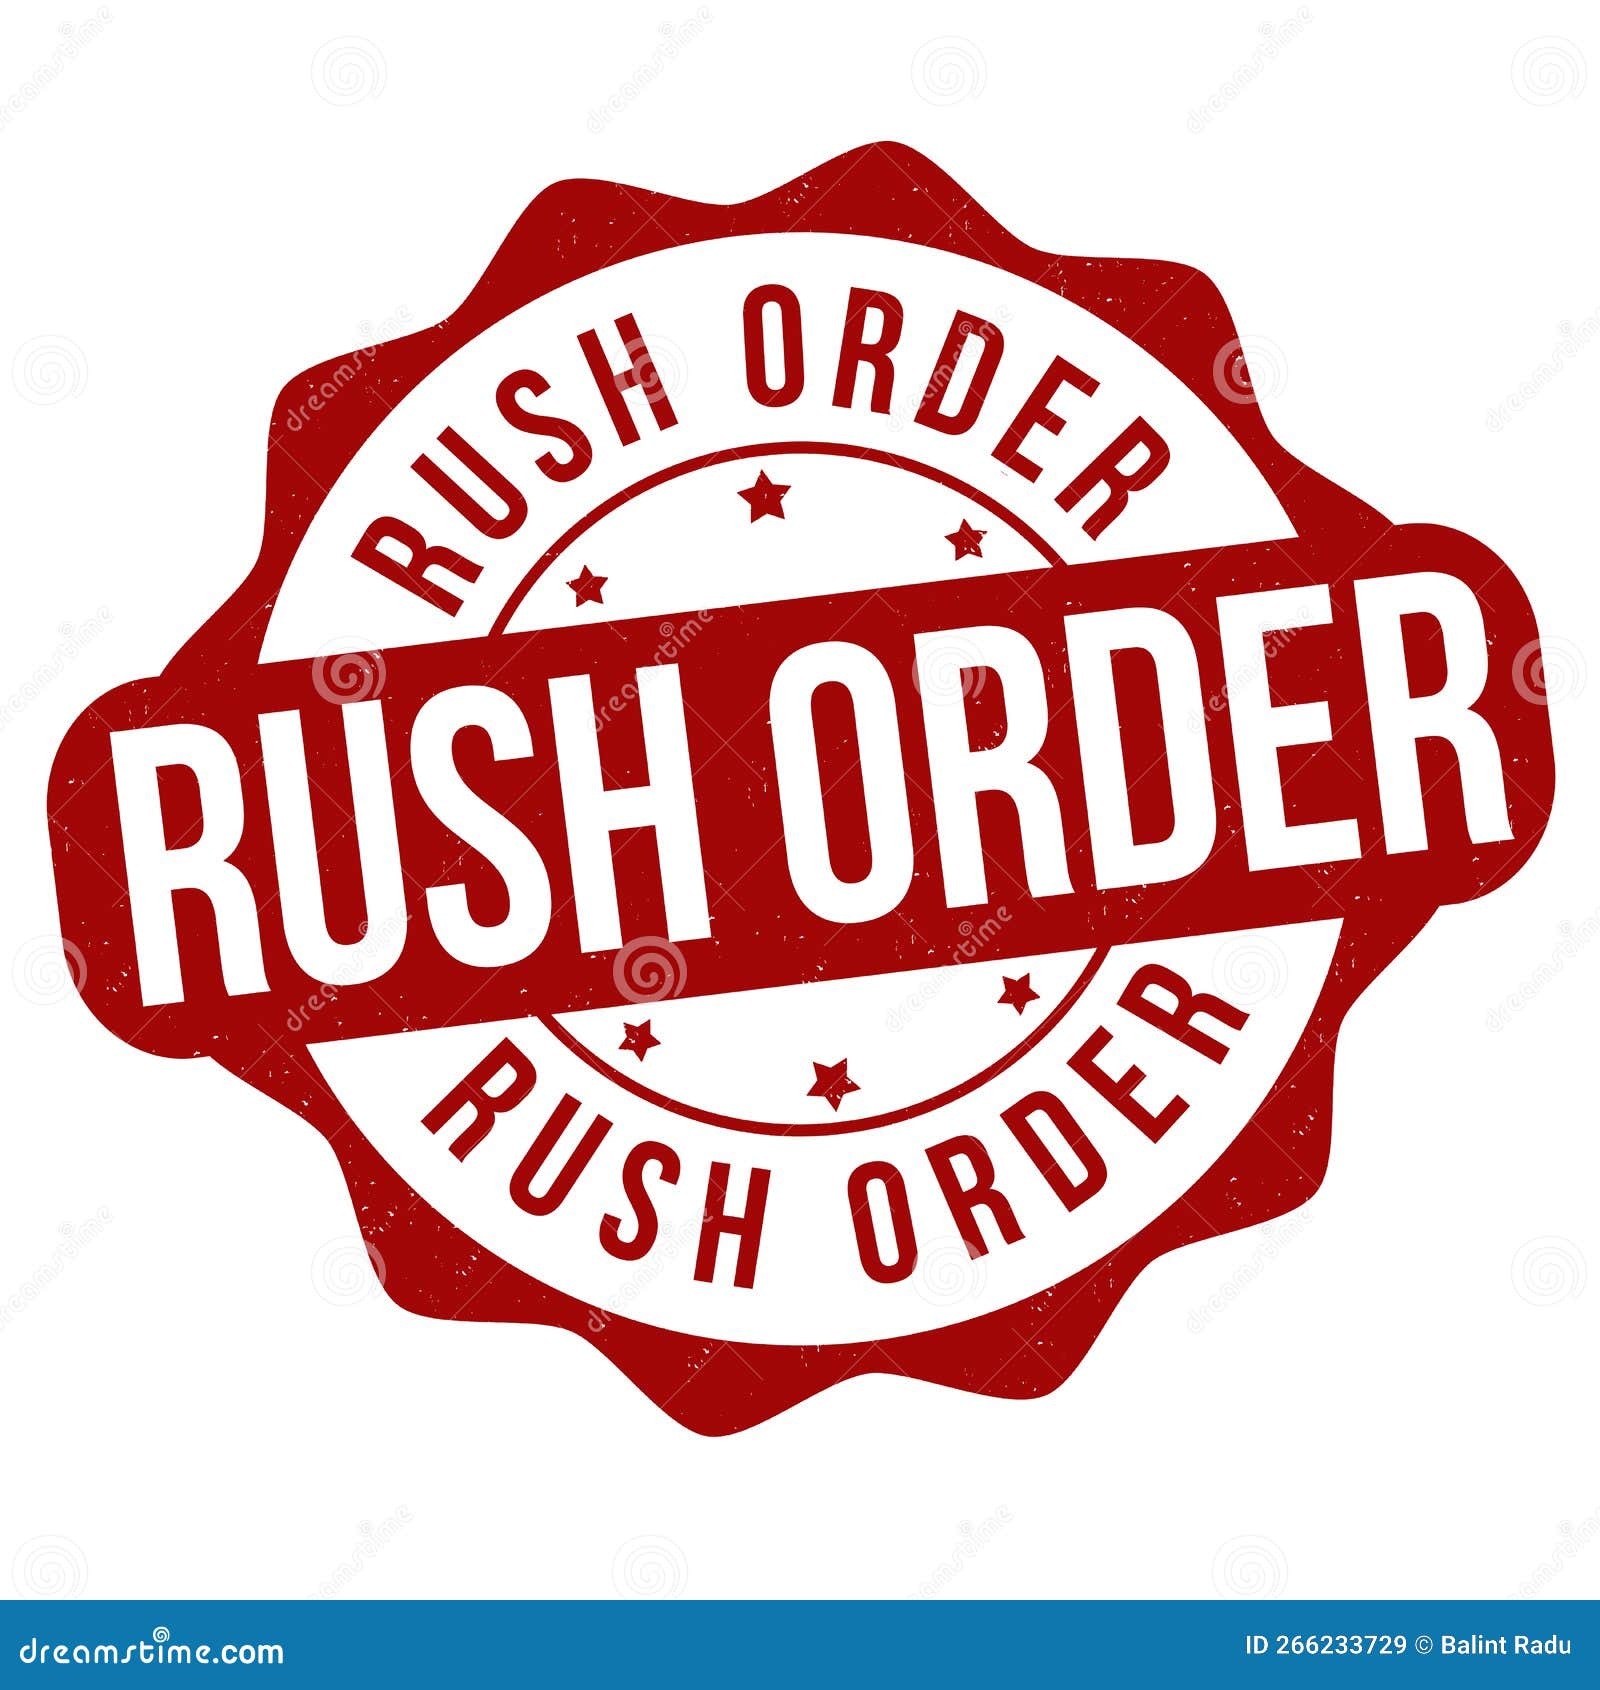 rush order label or stamp